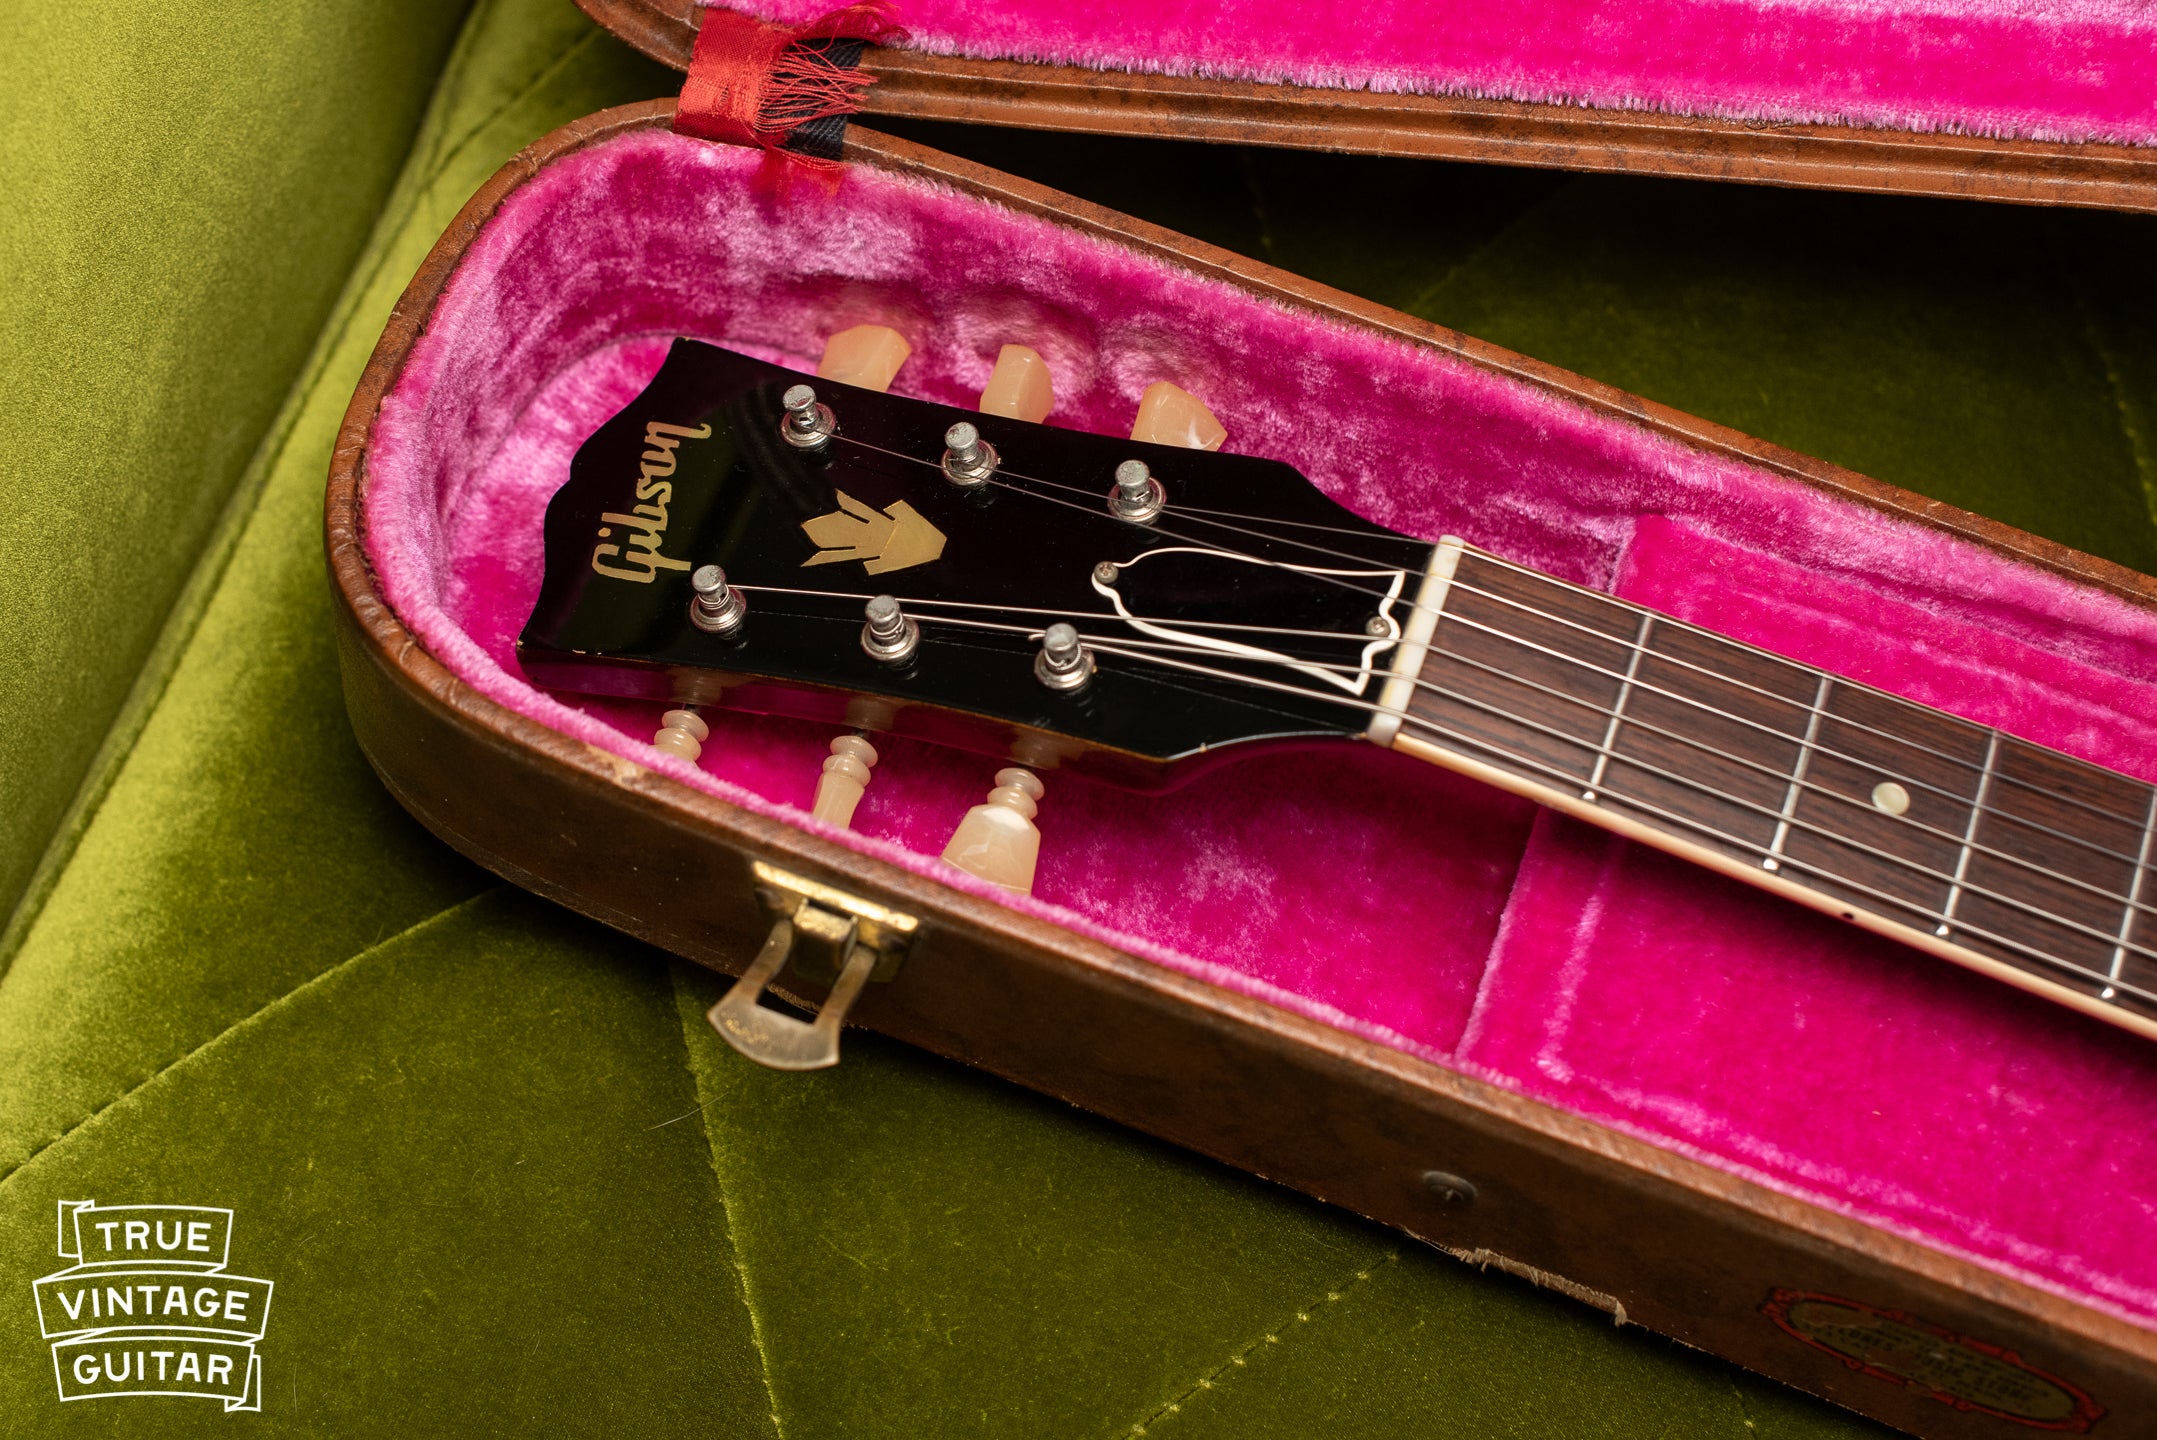 Vintage 1960 Gibson ES-335 TD guitar – True Vintage Guitar